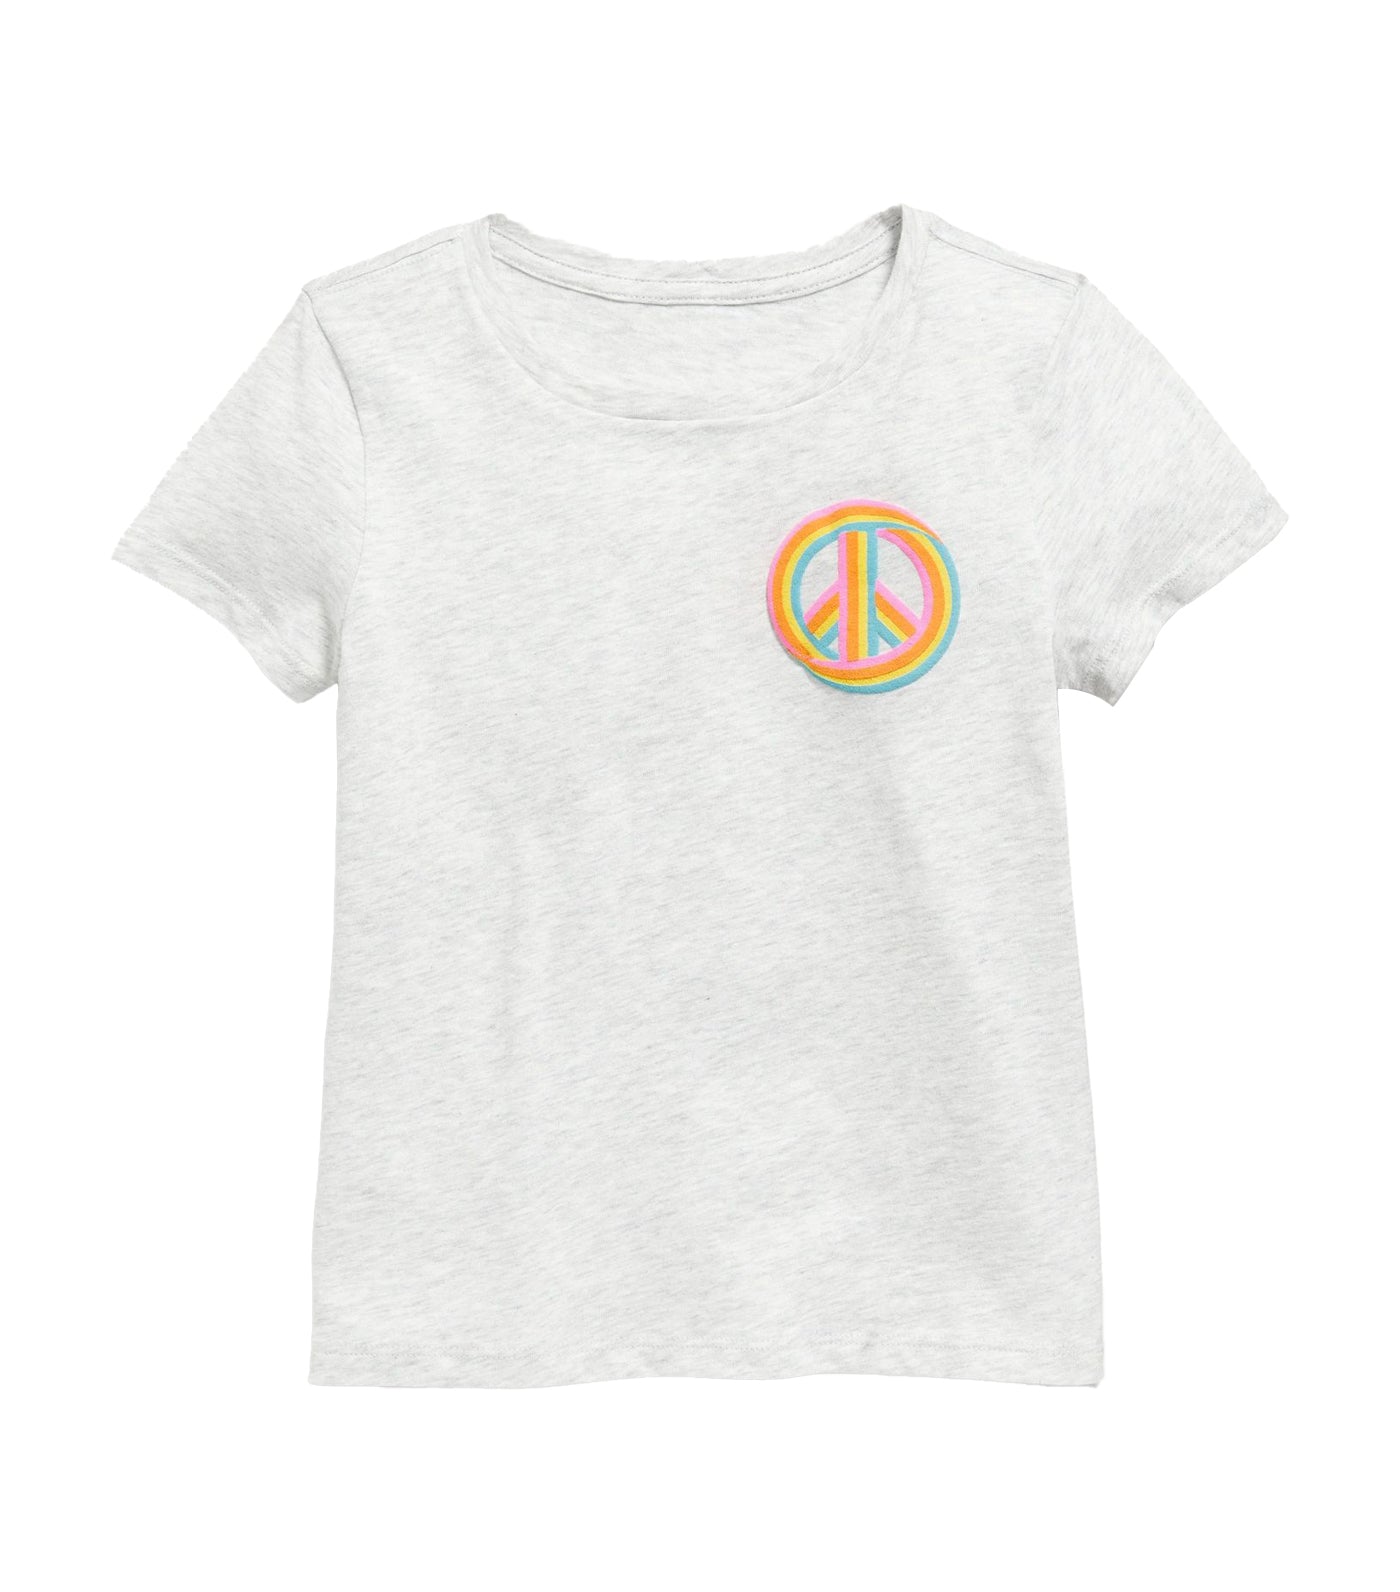 Short-Sleeve Graphic T-Shirt for Girls Light Heather Gray